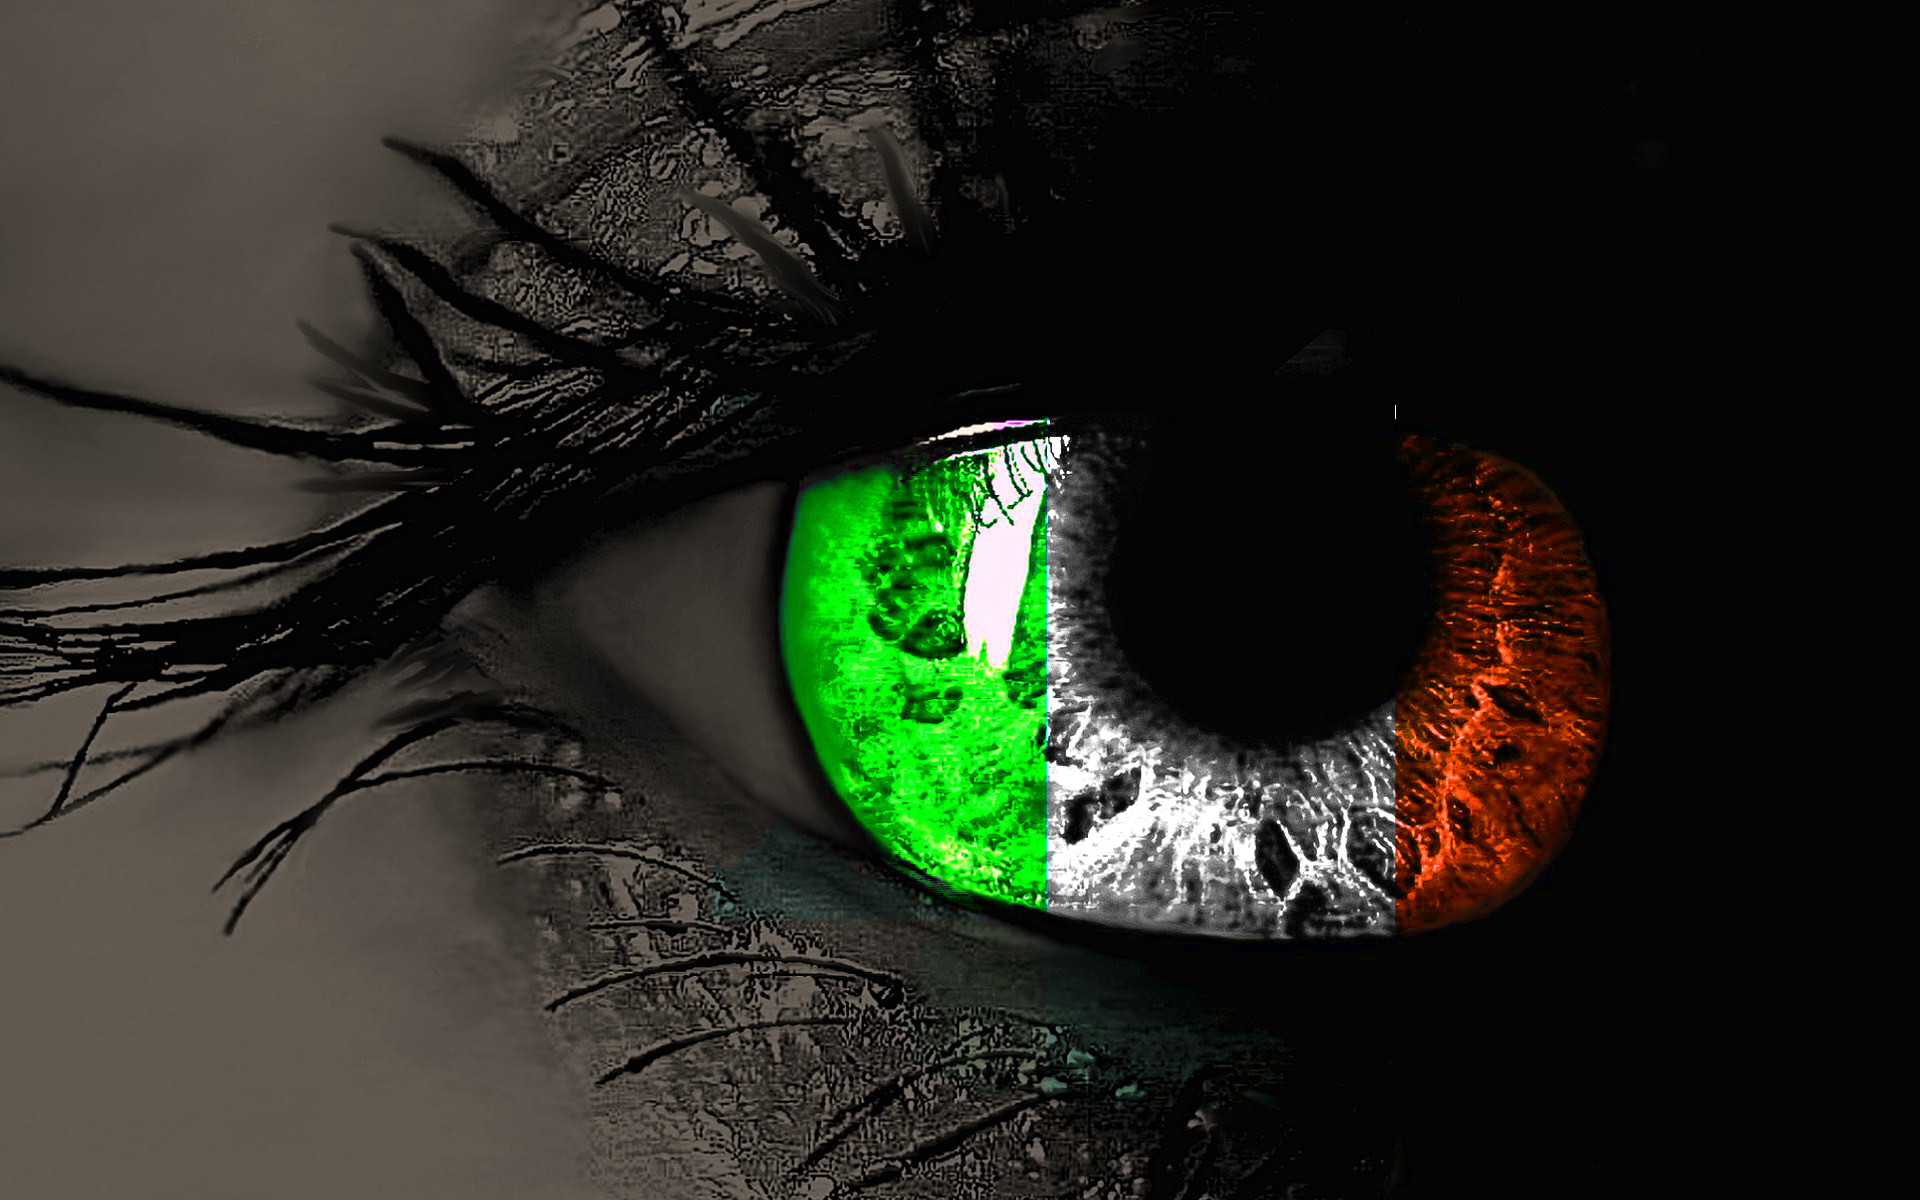 1920x1200 amazing-irish-flag-in-eyes-hd-wallpaper -for-desktop-background-download-irish-flag-images